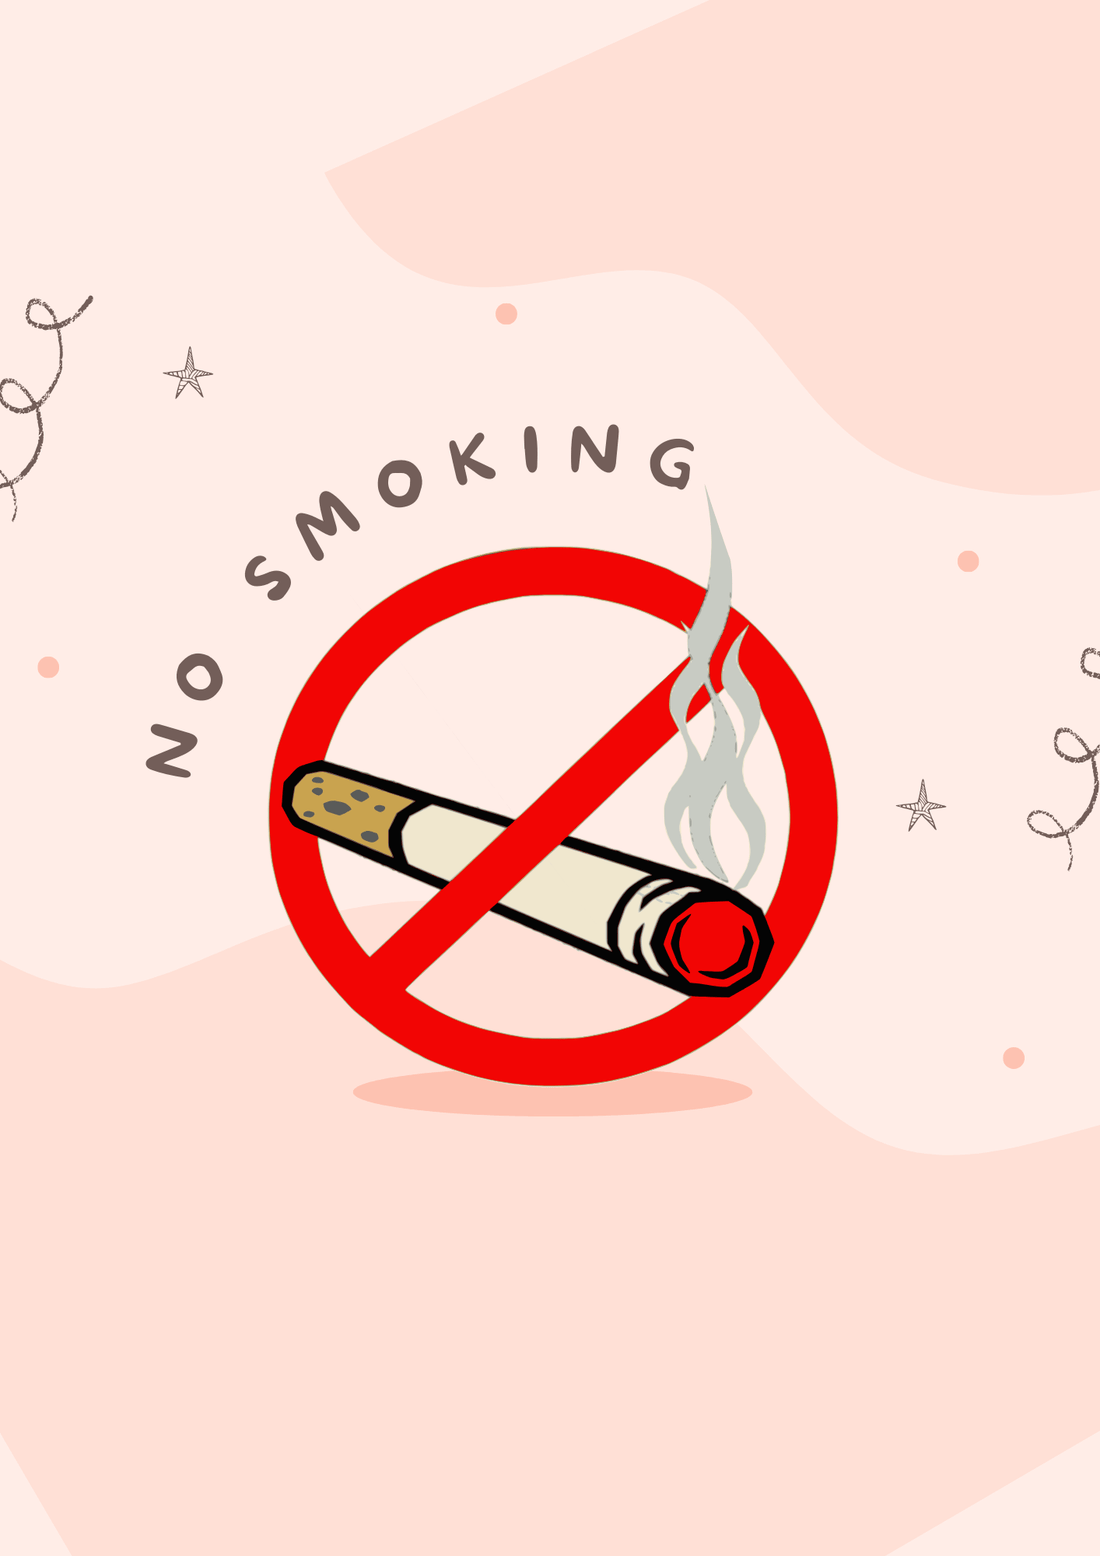 I Want To Quit Smoking: 67 Reasons to Embrace a Smoke-Free Life - cigtrus.com